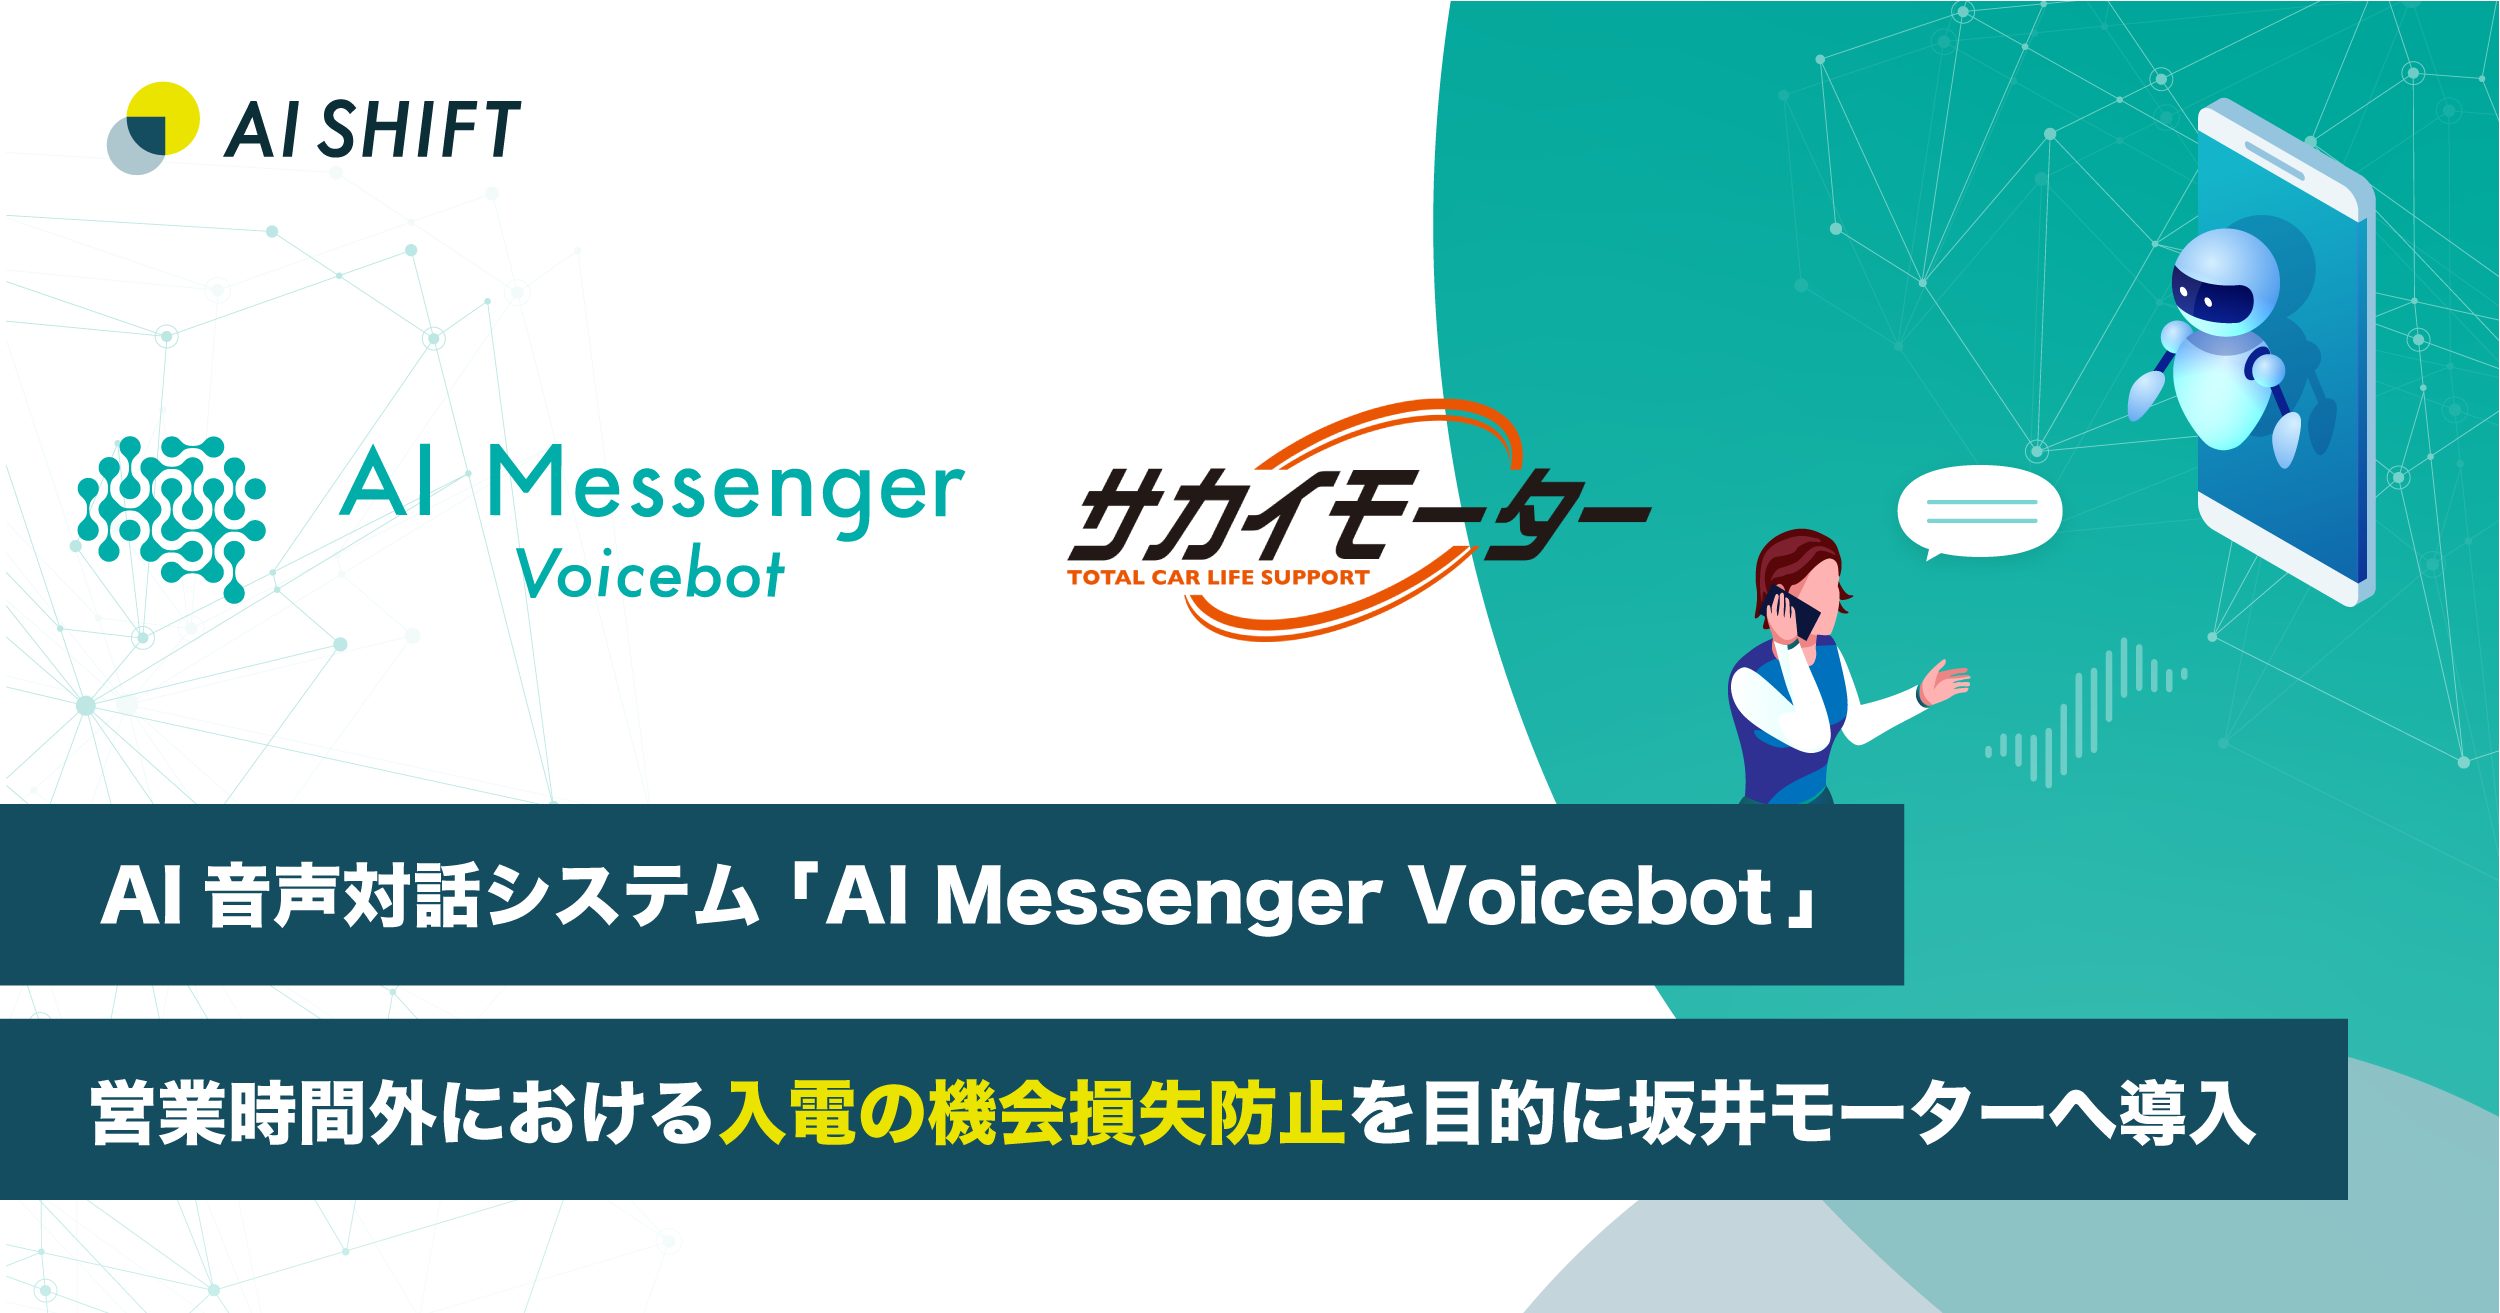 AI自動音声対話システム「AI Messenger Voicebot」、 営業時間外における入電の機会損失防止を目的に坂井モーターへ導入